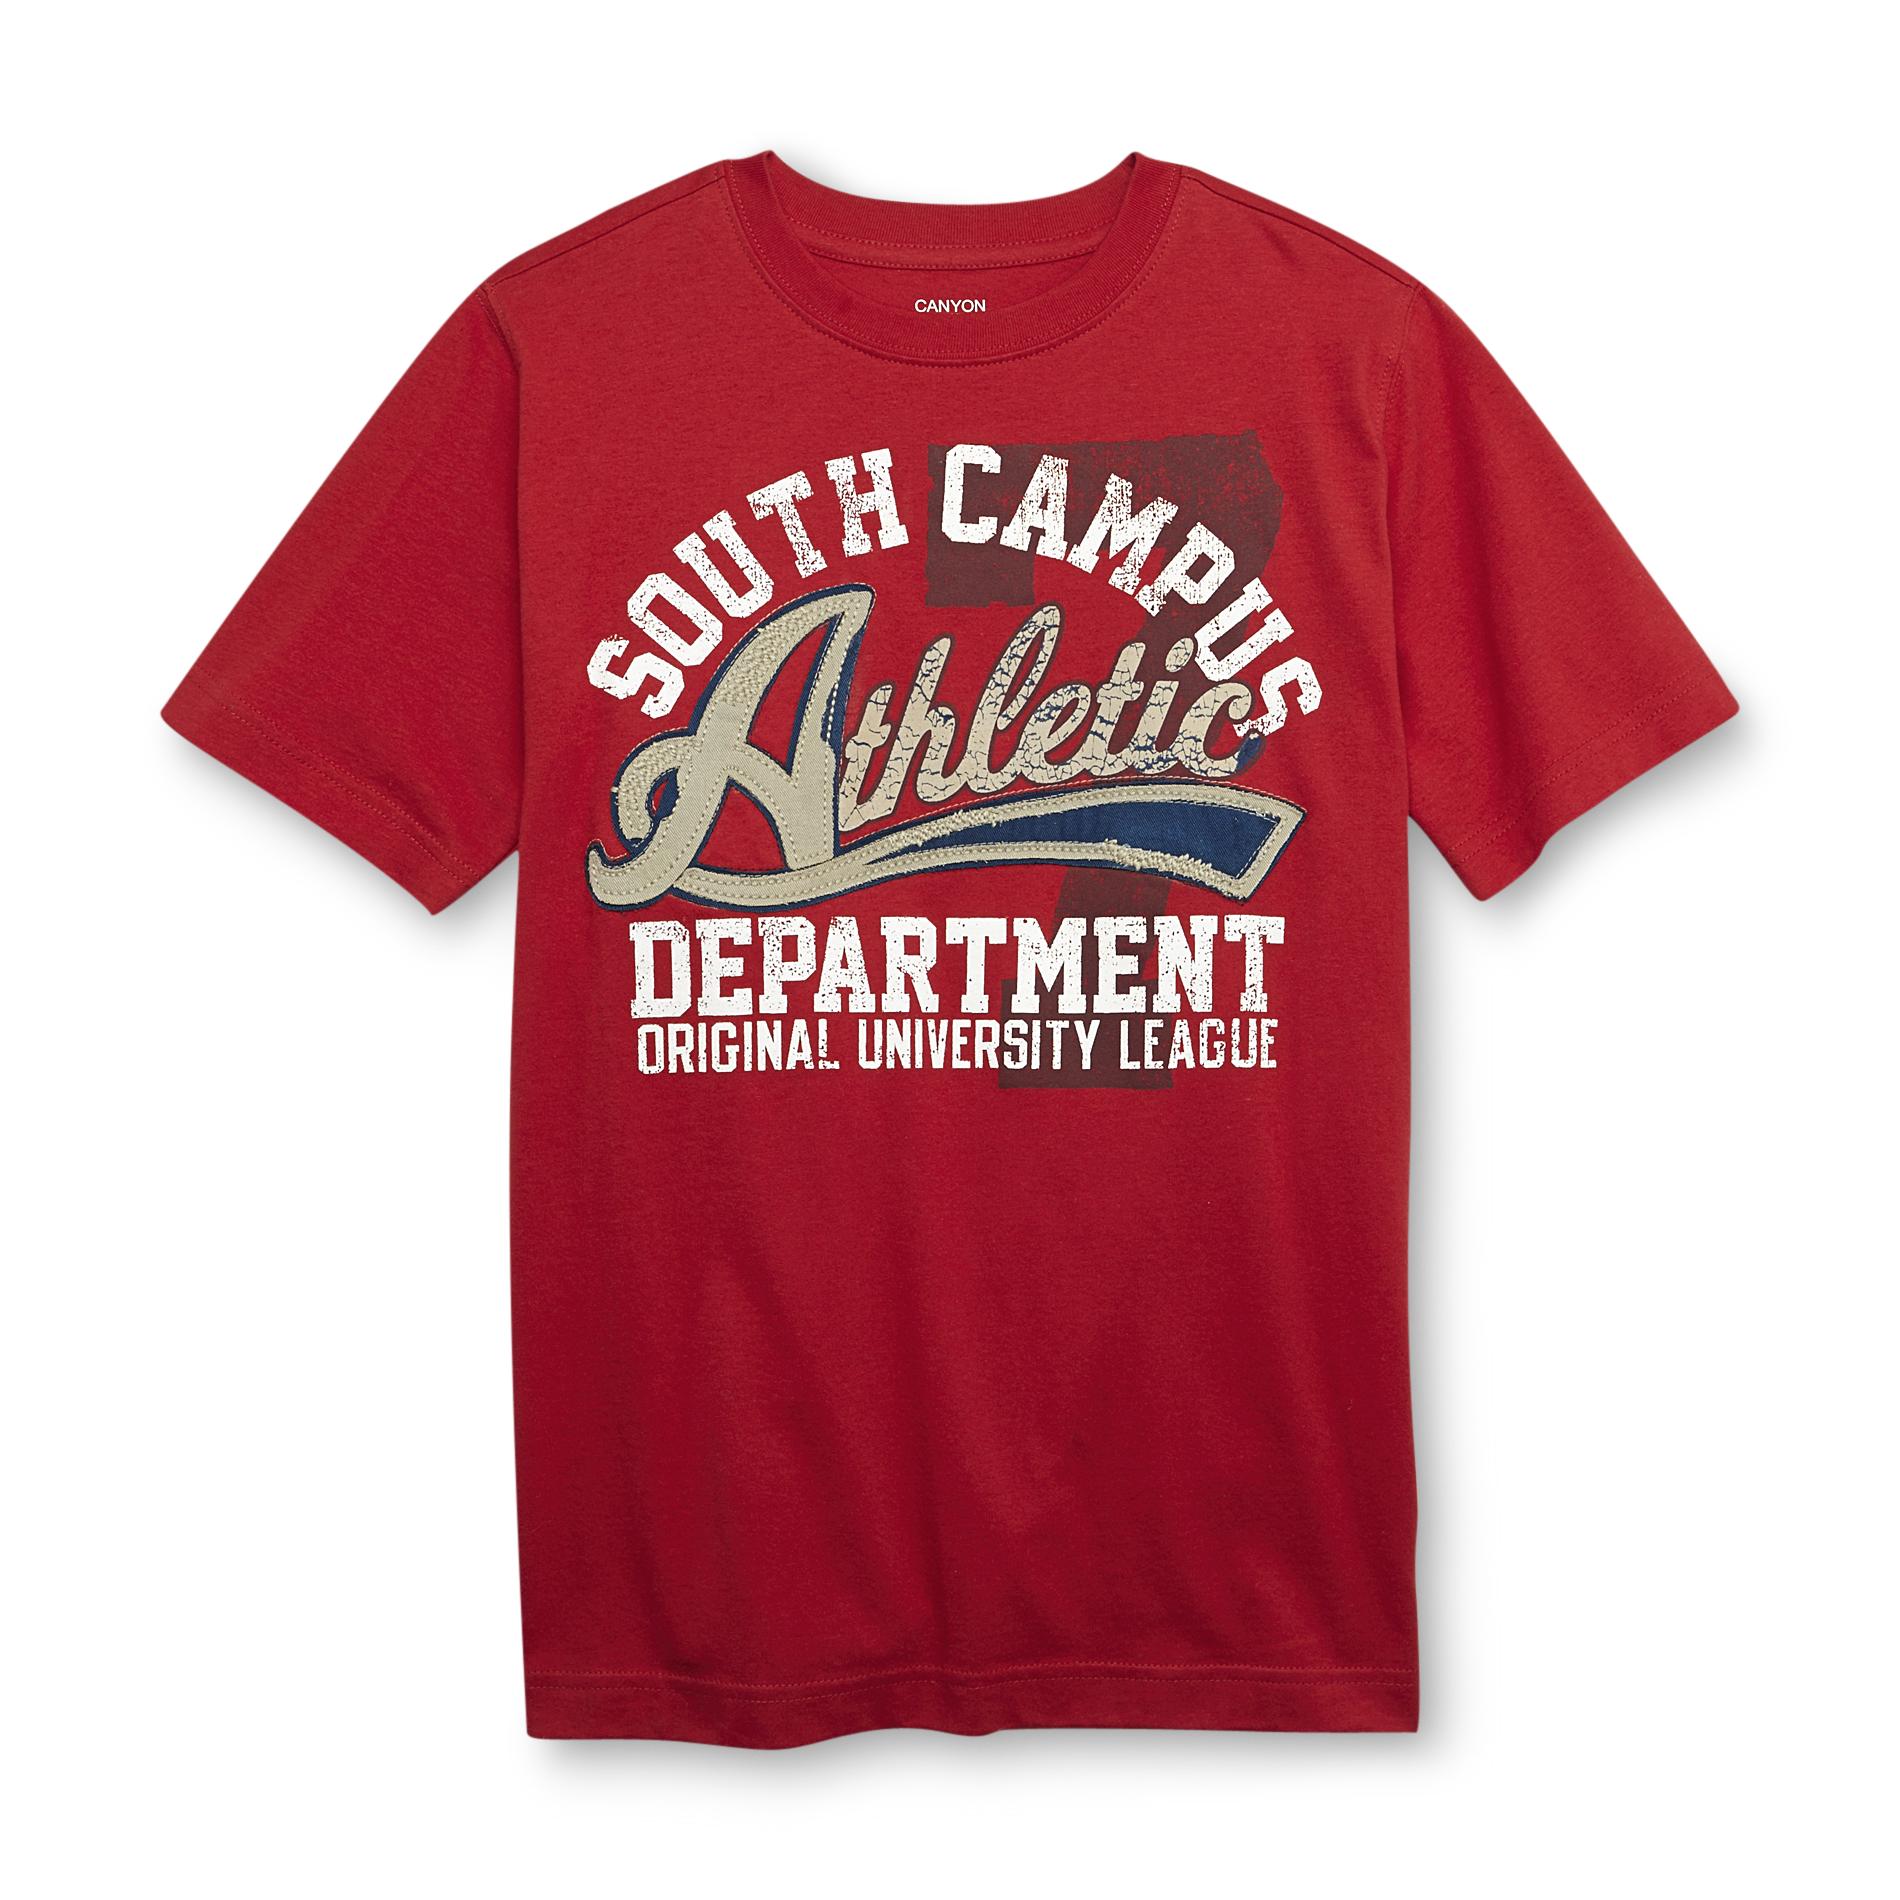 Canyon River Blues Boy's T-Shirt - Athletic Department